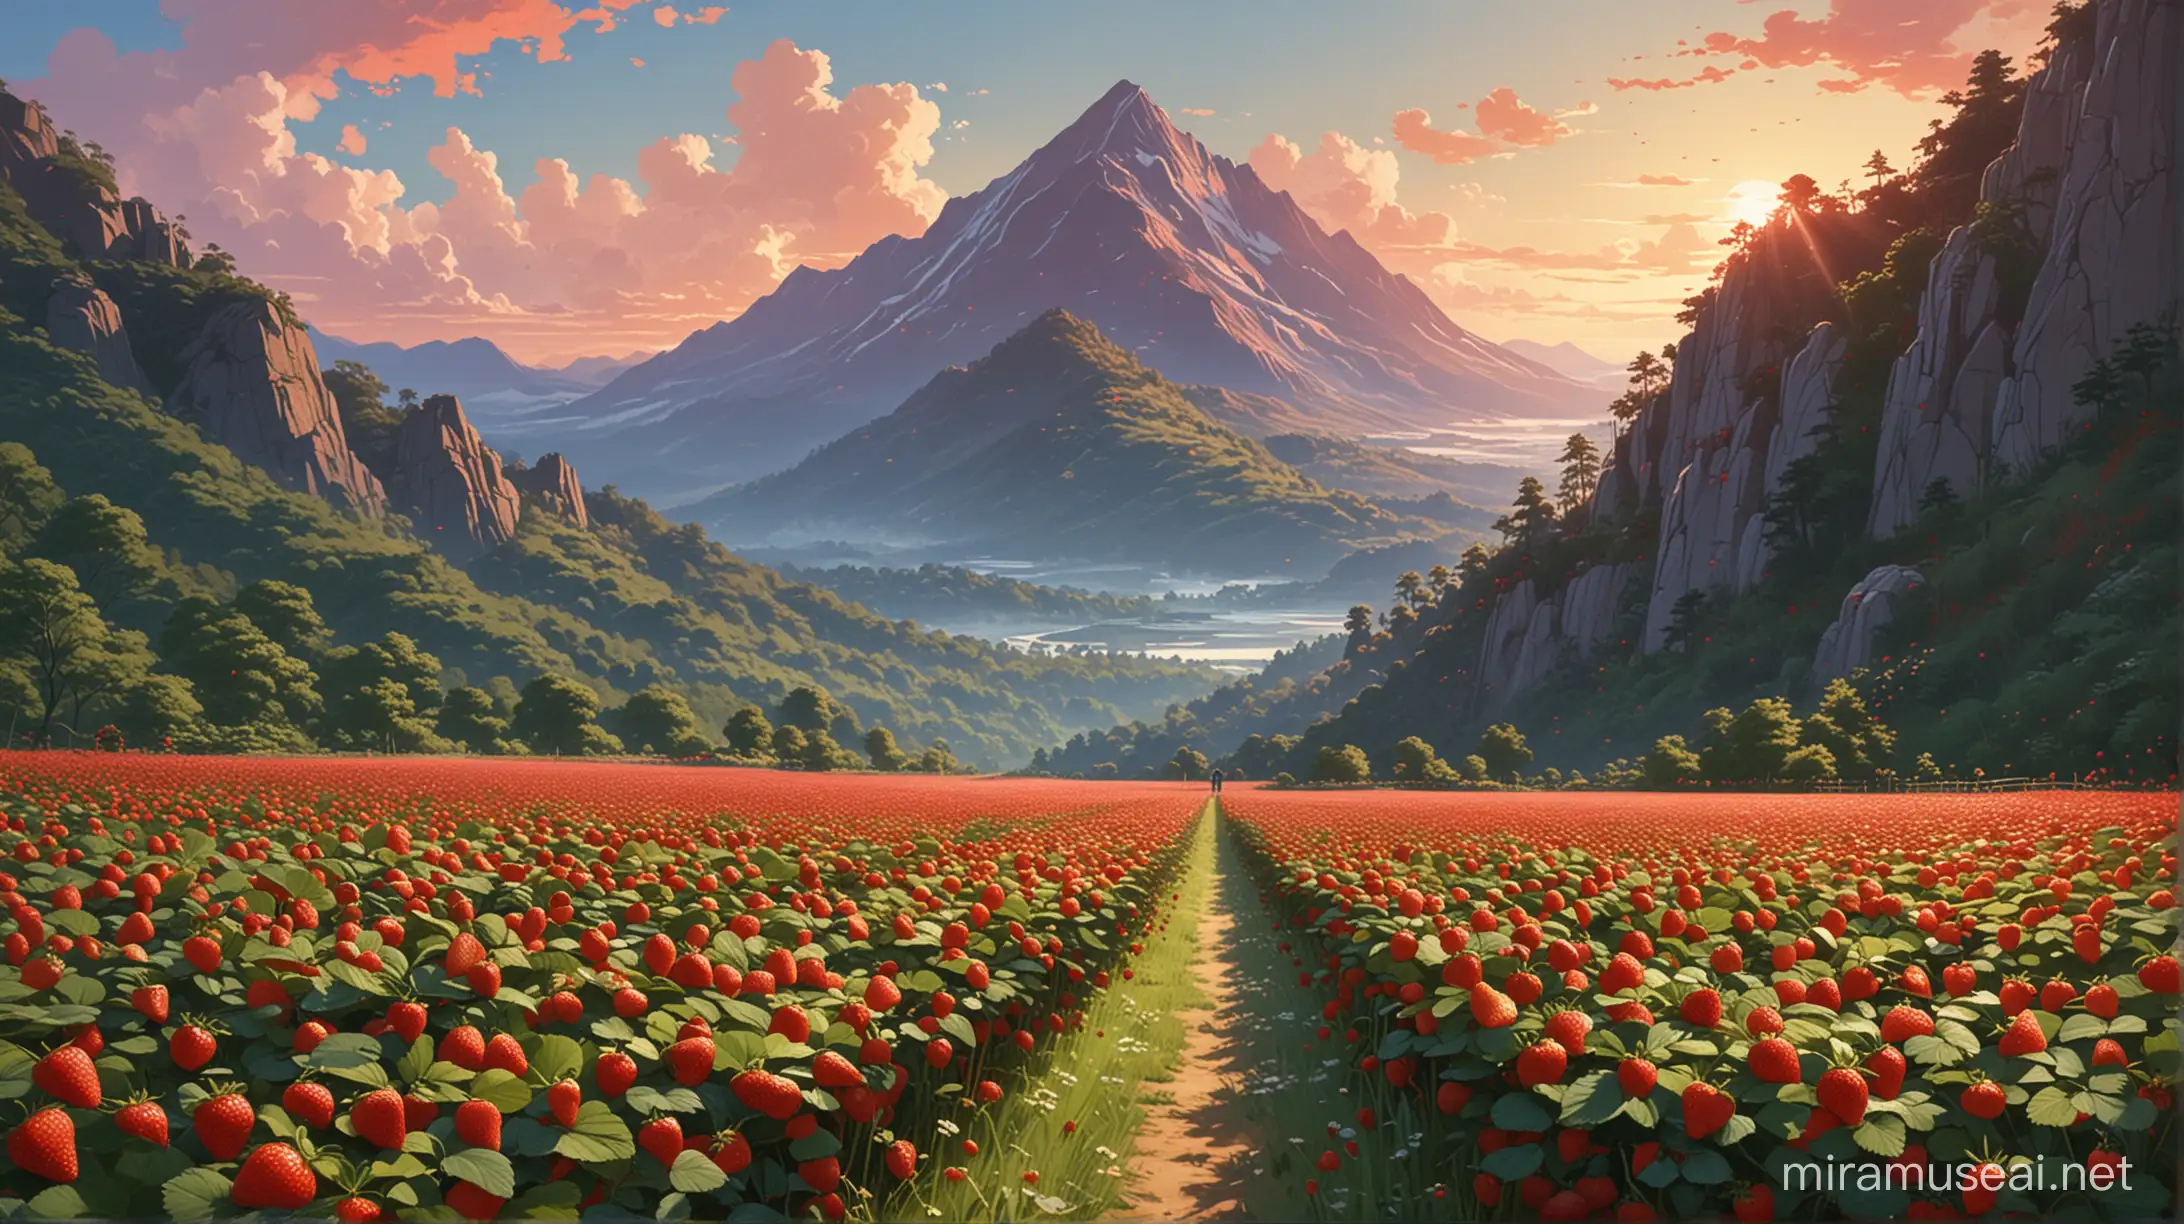 Vibrant Strawberry Field with Majestic Mountain Backdrop Acrylic Painting Inspired by Makoto Shinkai and Studio Ghibli